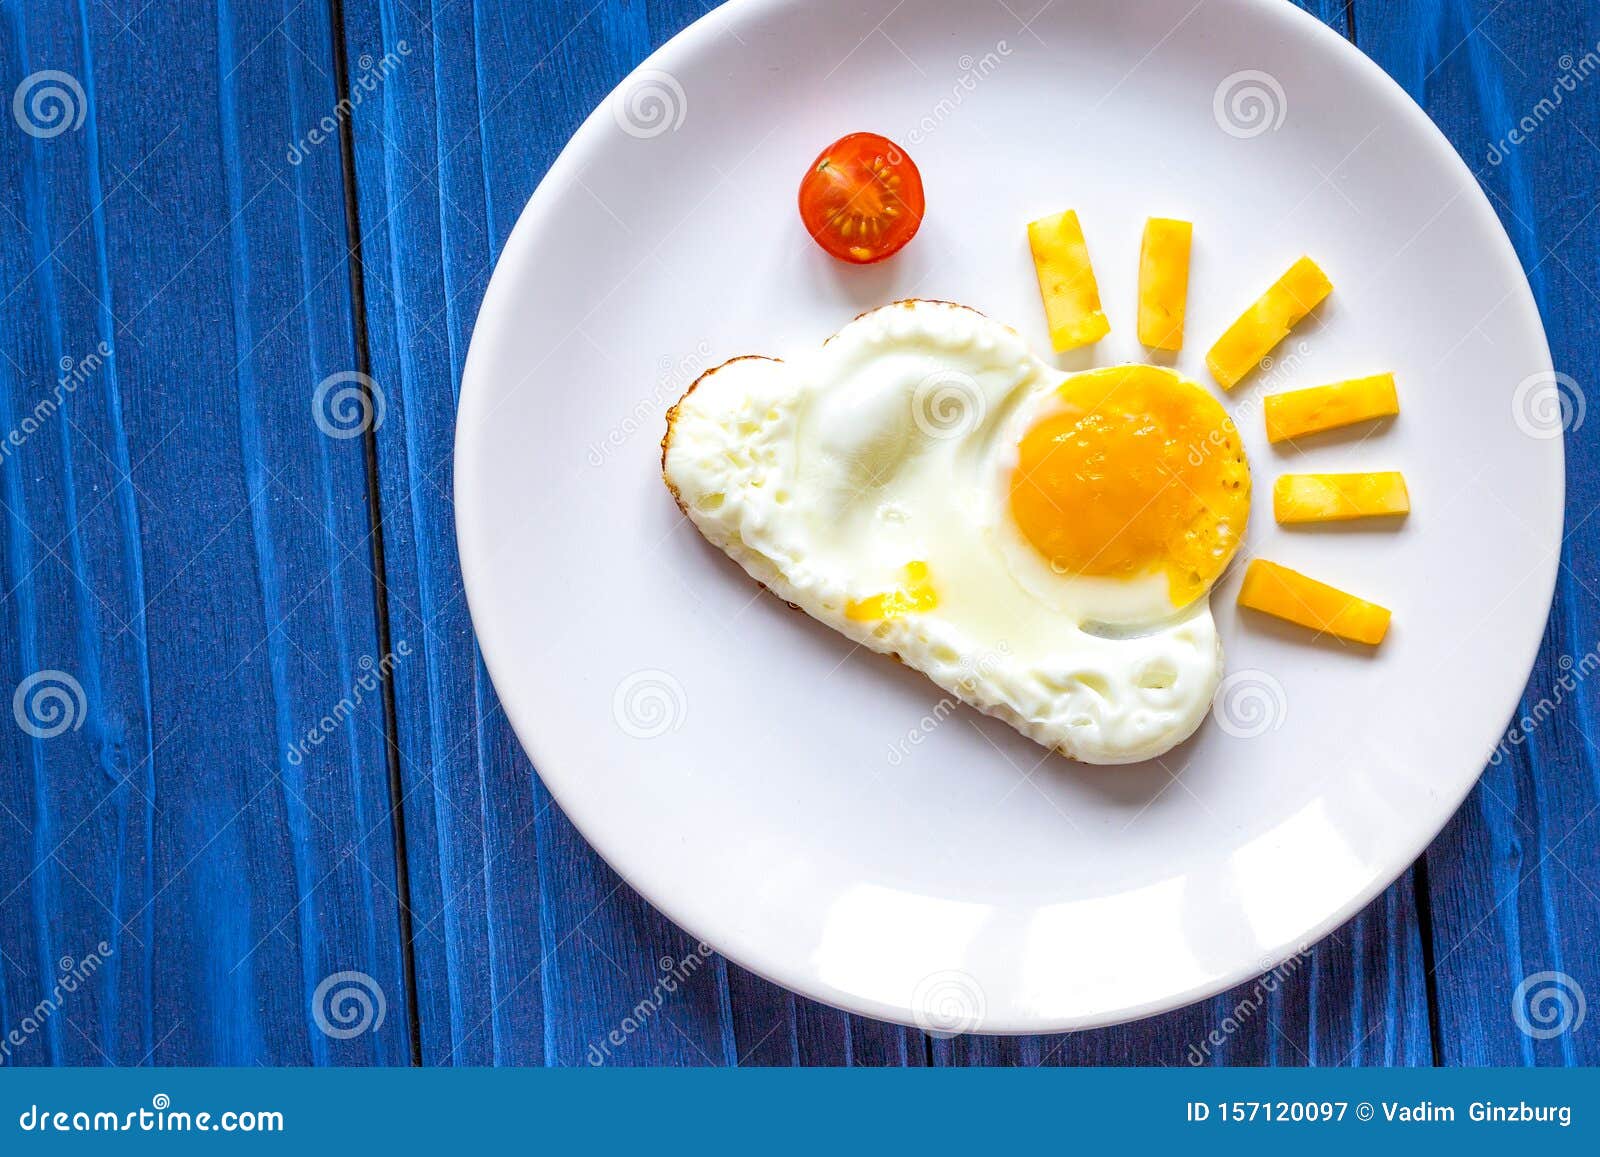 завтрак ребенку из яиц